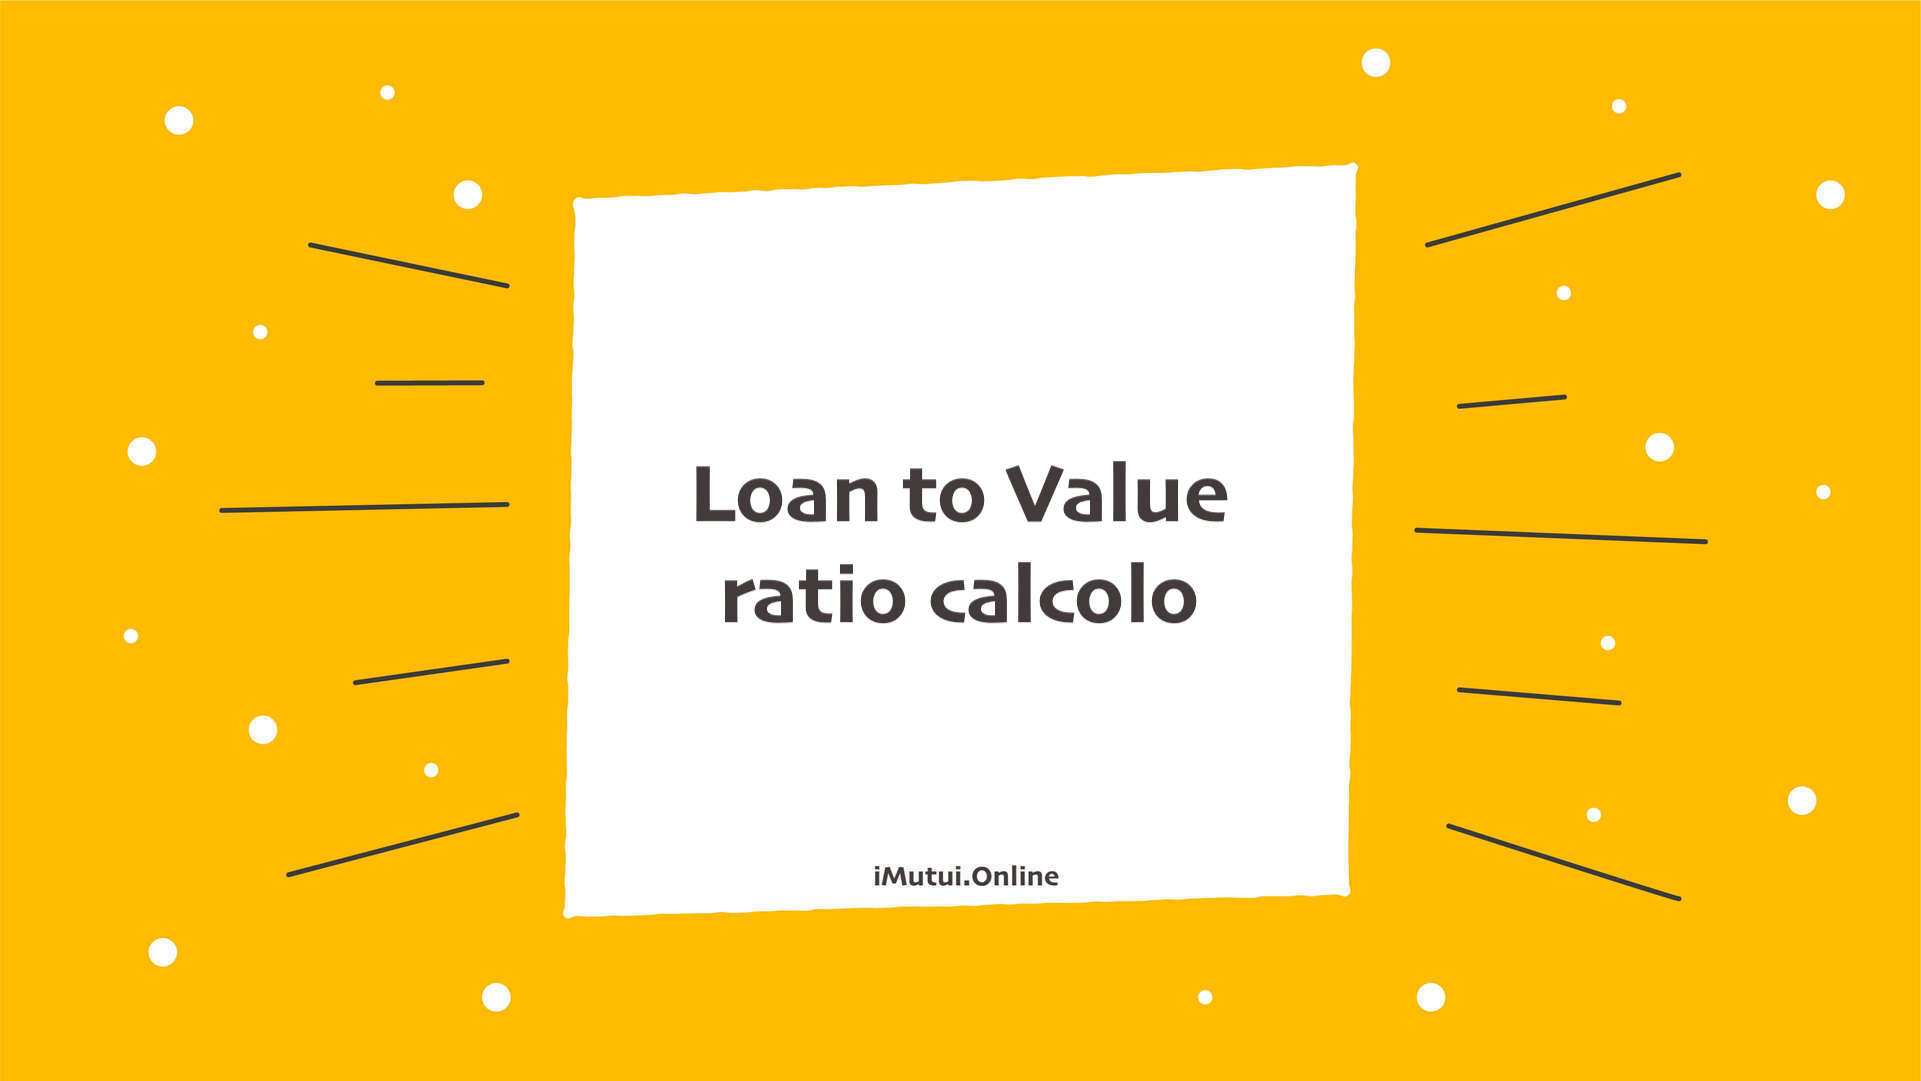 Loan to Value ratio calcolo